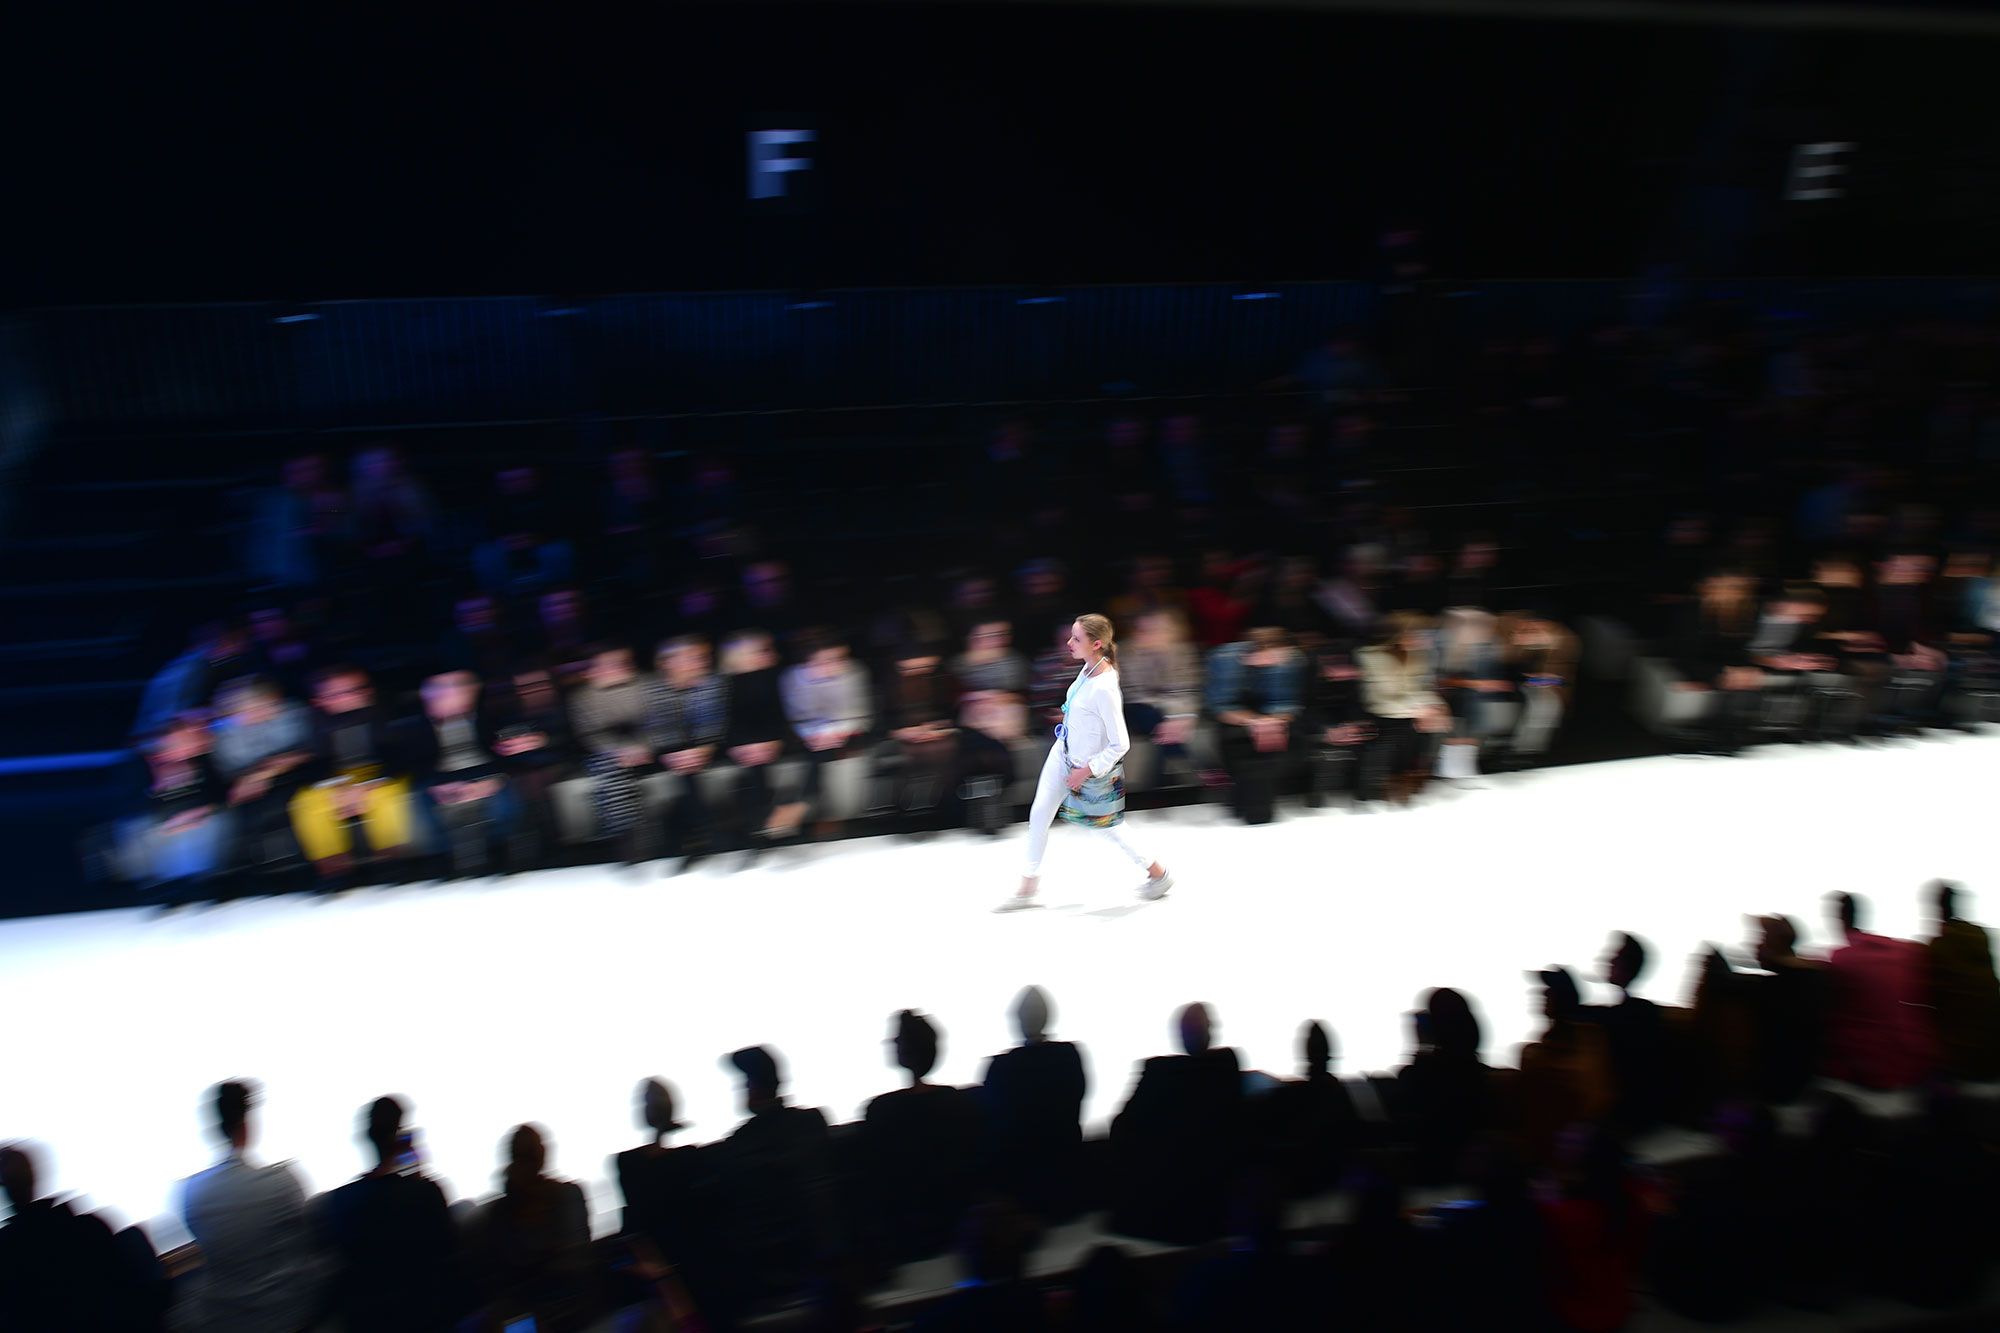 MANIFESTO - TAKING OFF: Louis Vuitton Women's Cruise 2020 Fashion Show Live  Stream